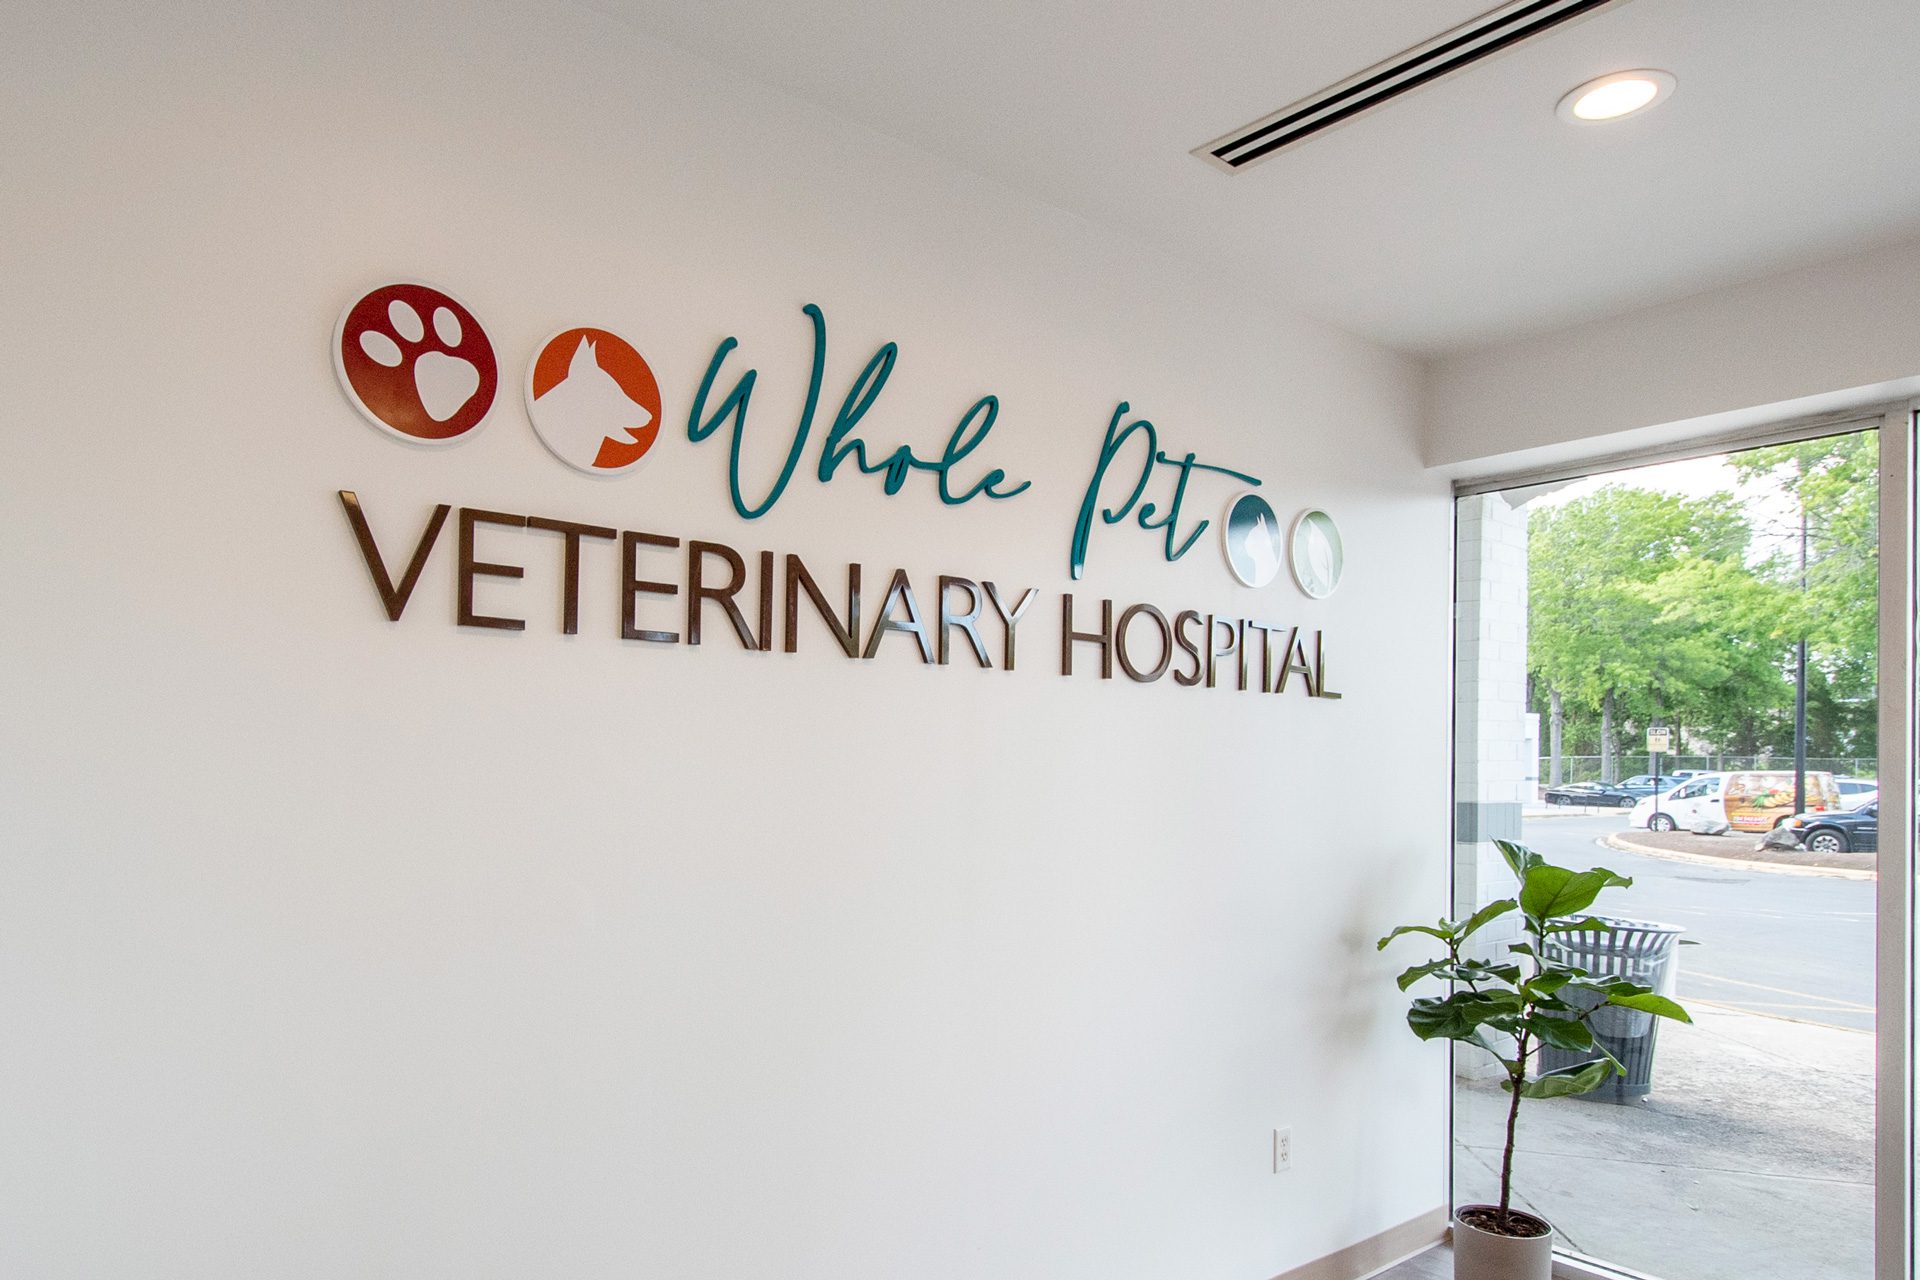 Whole Pet Veterinary Hospital interior sign of logo